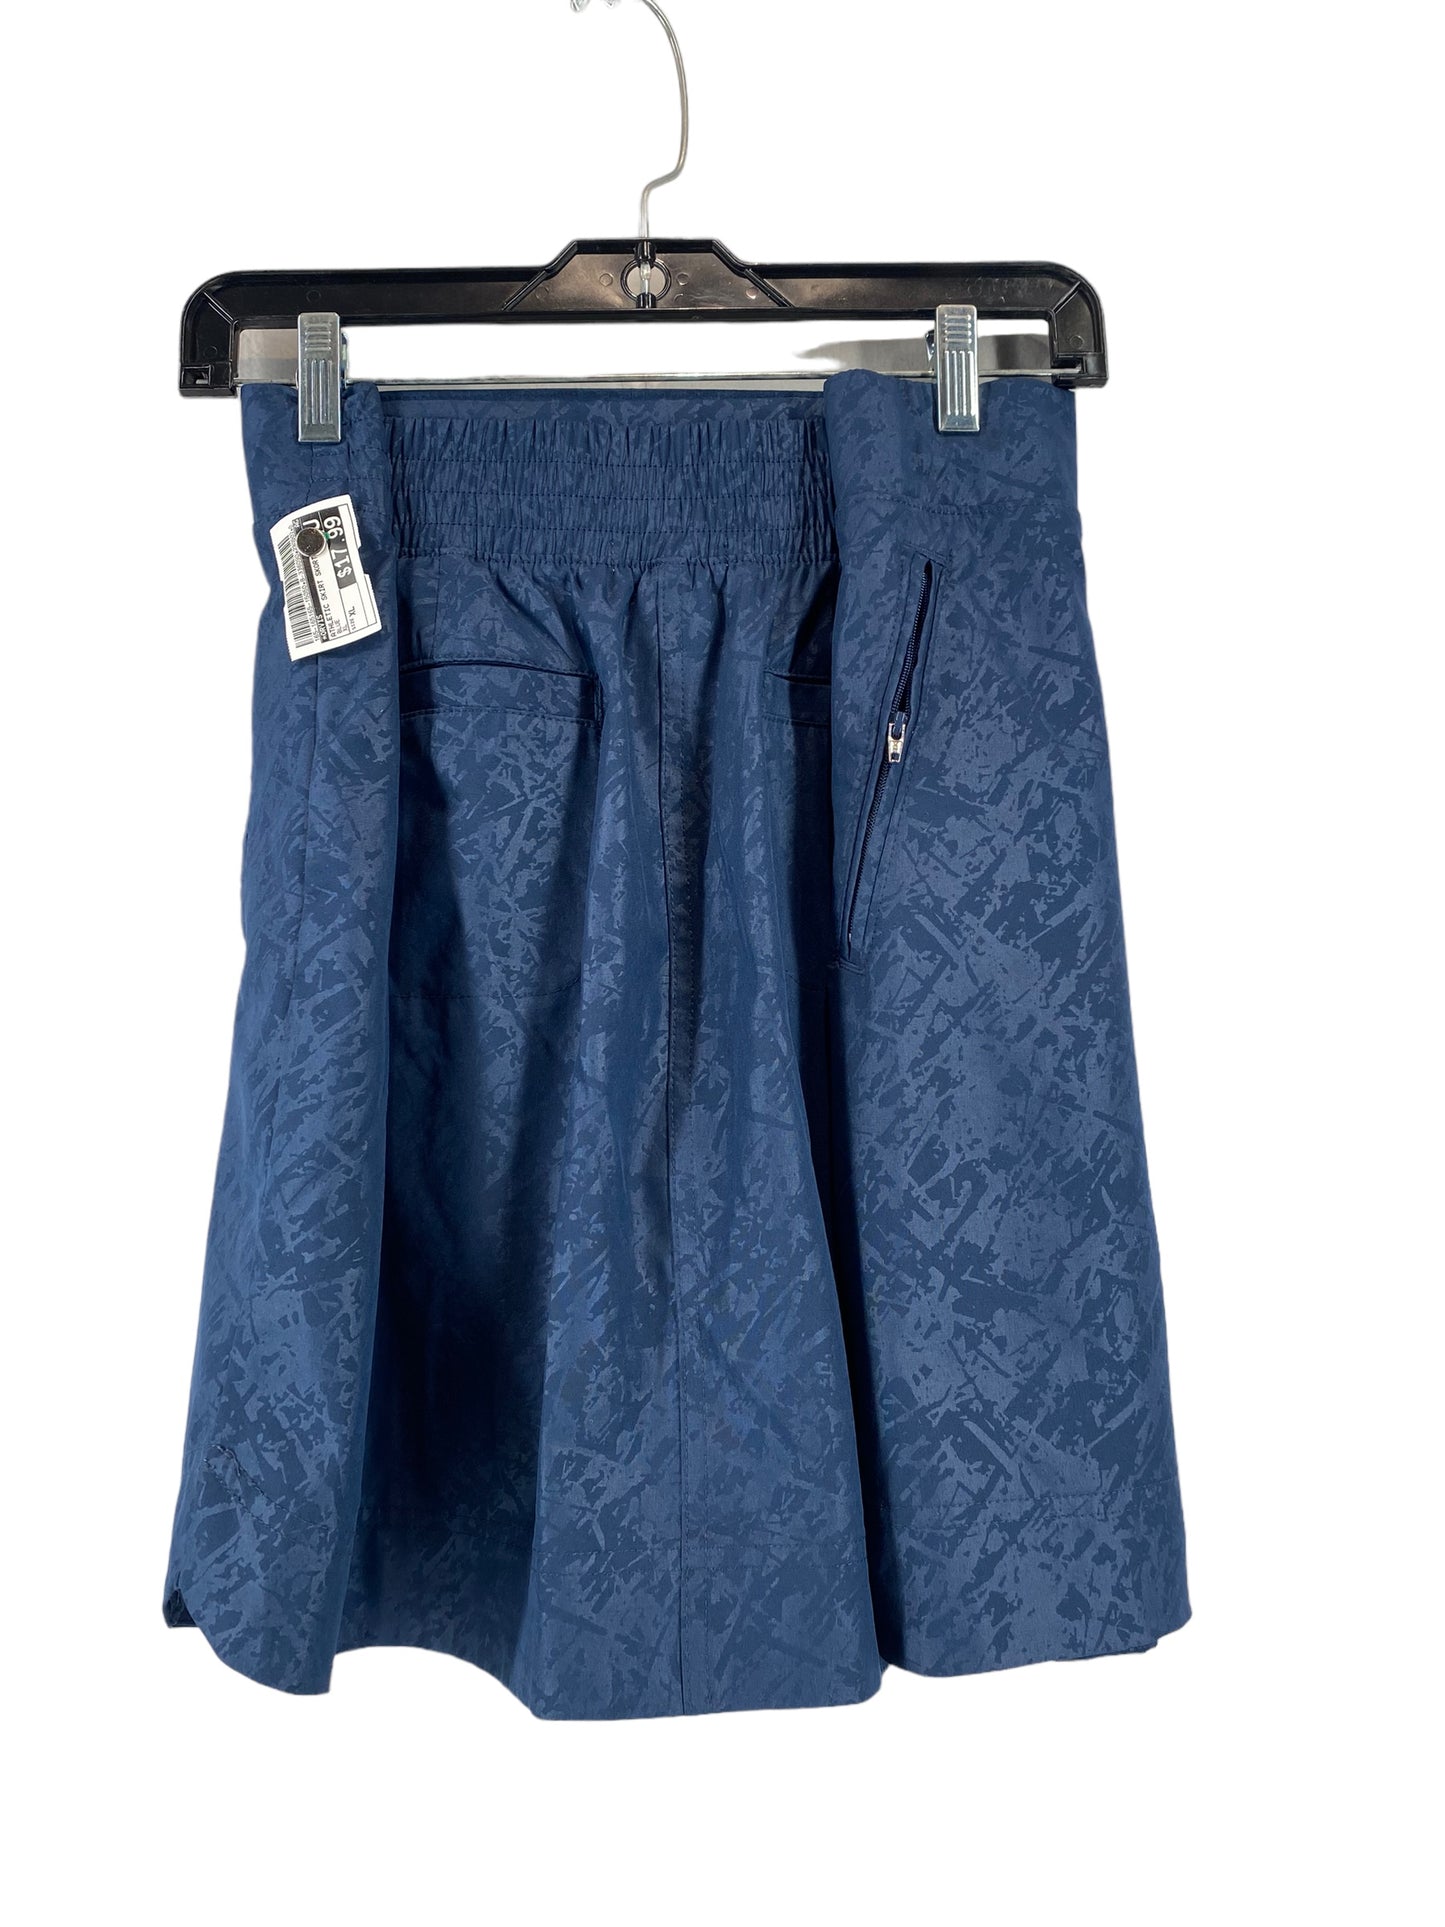 Athletic Skirt Skort By Orvis  Size: Xl